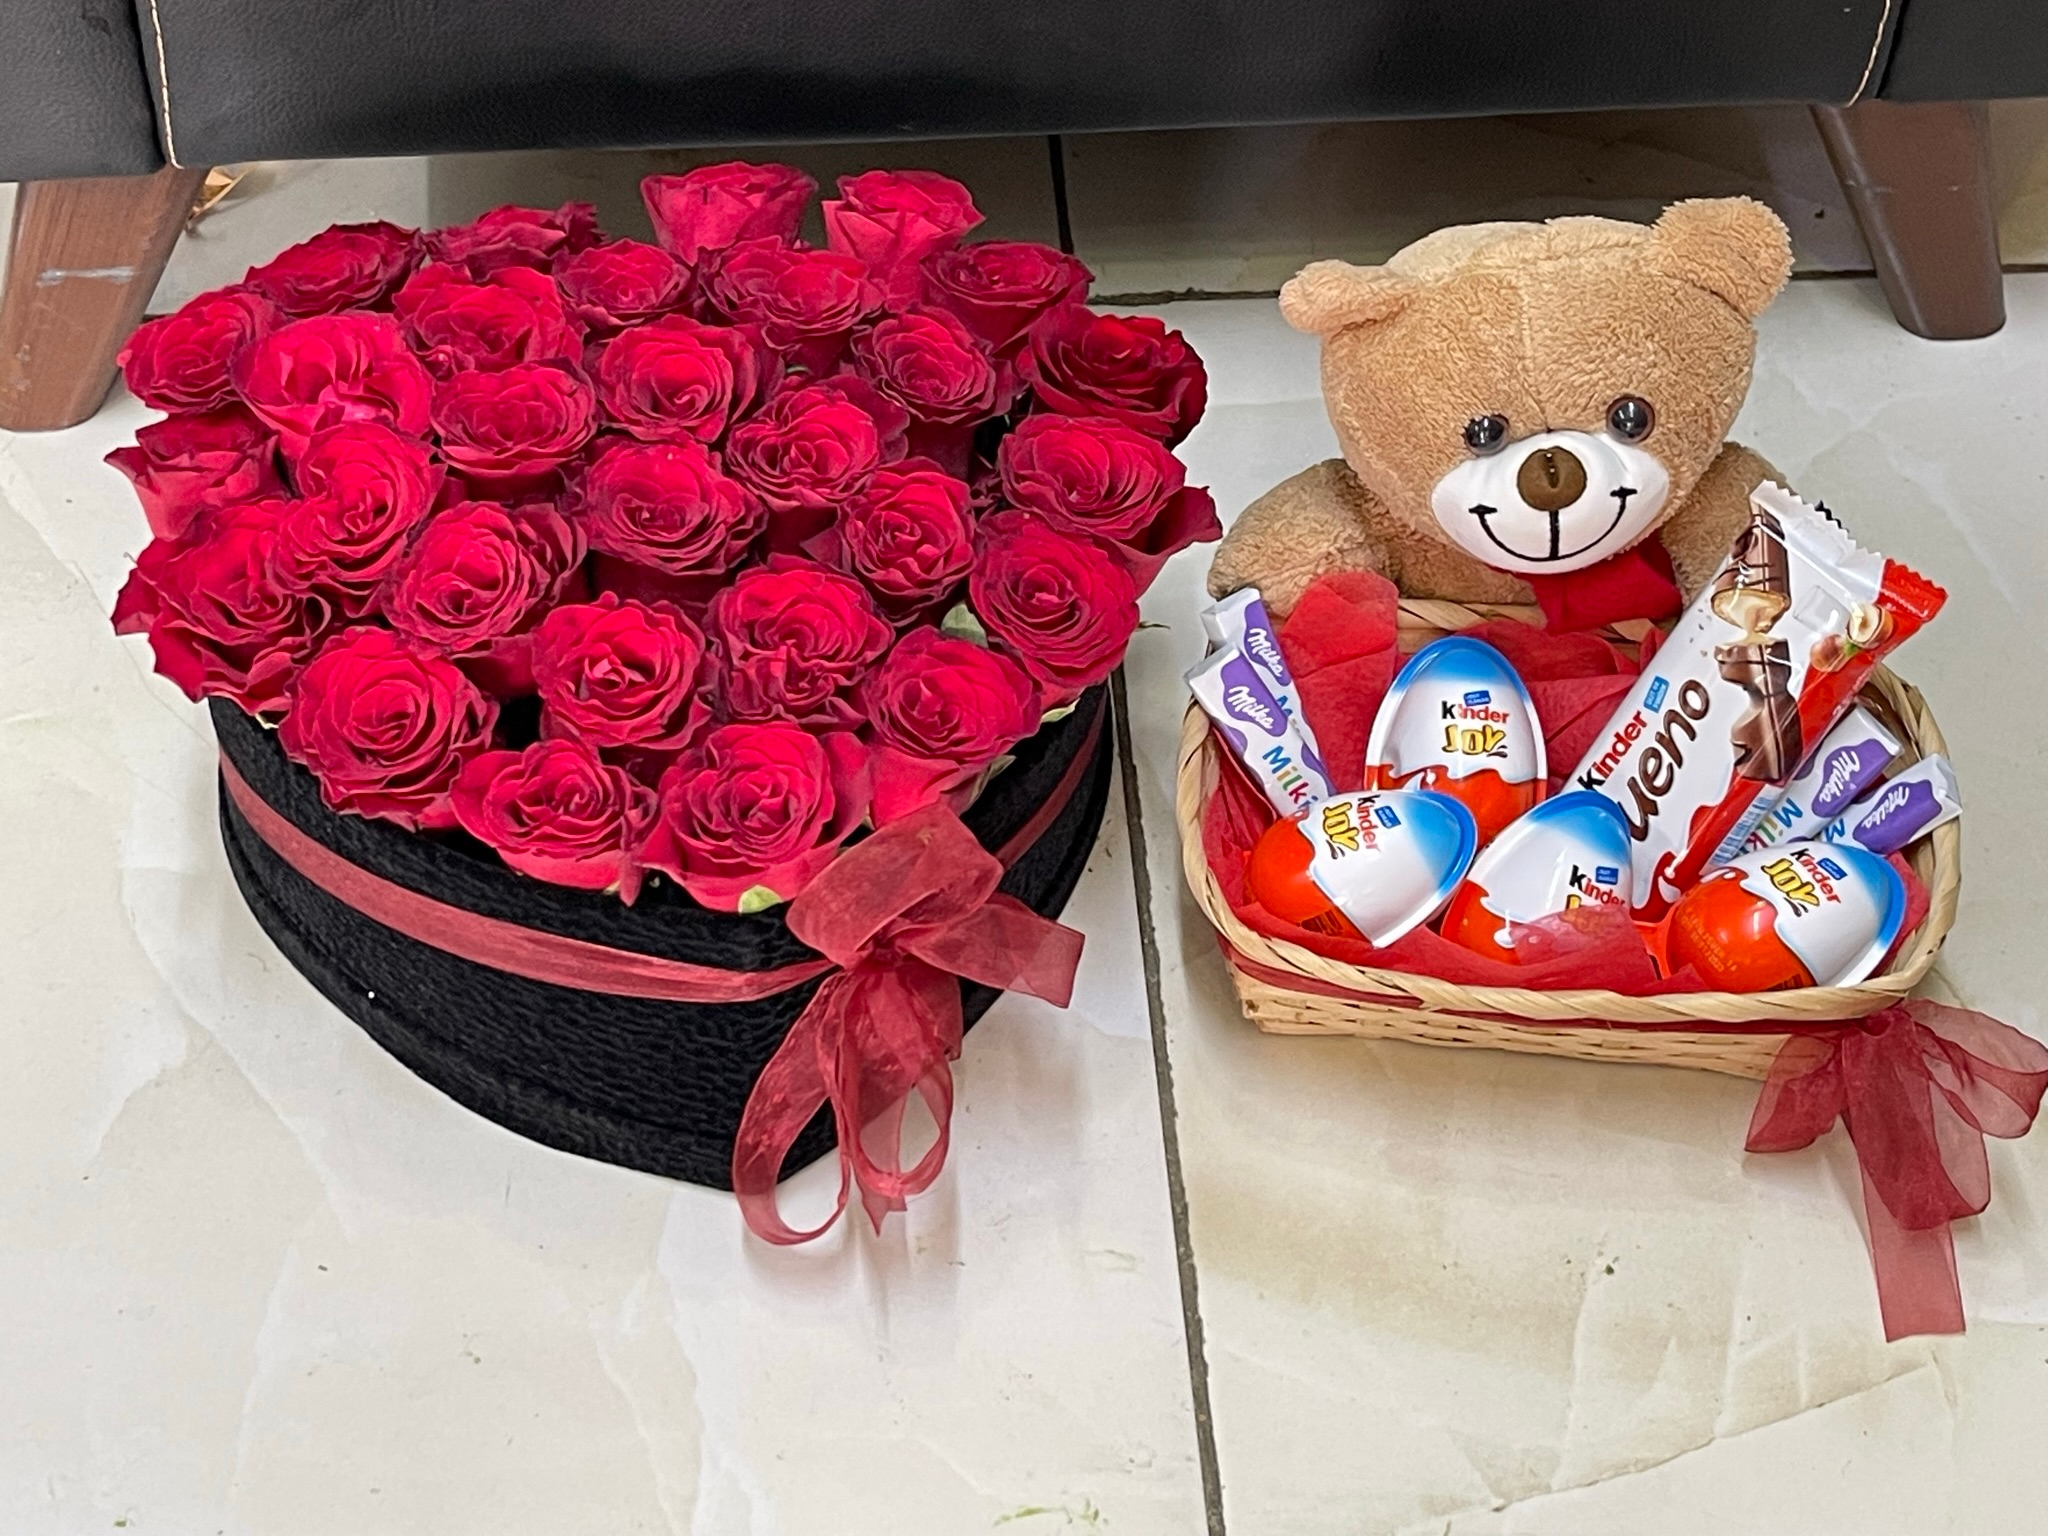  Kemer Blumen 29 Roses in Heart Box and Gift Basket